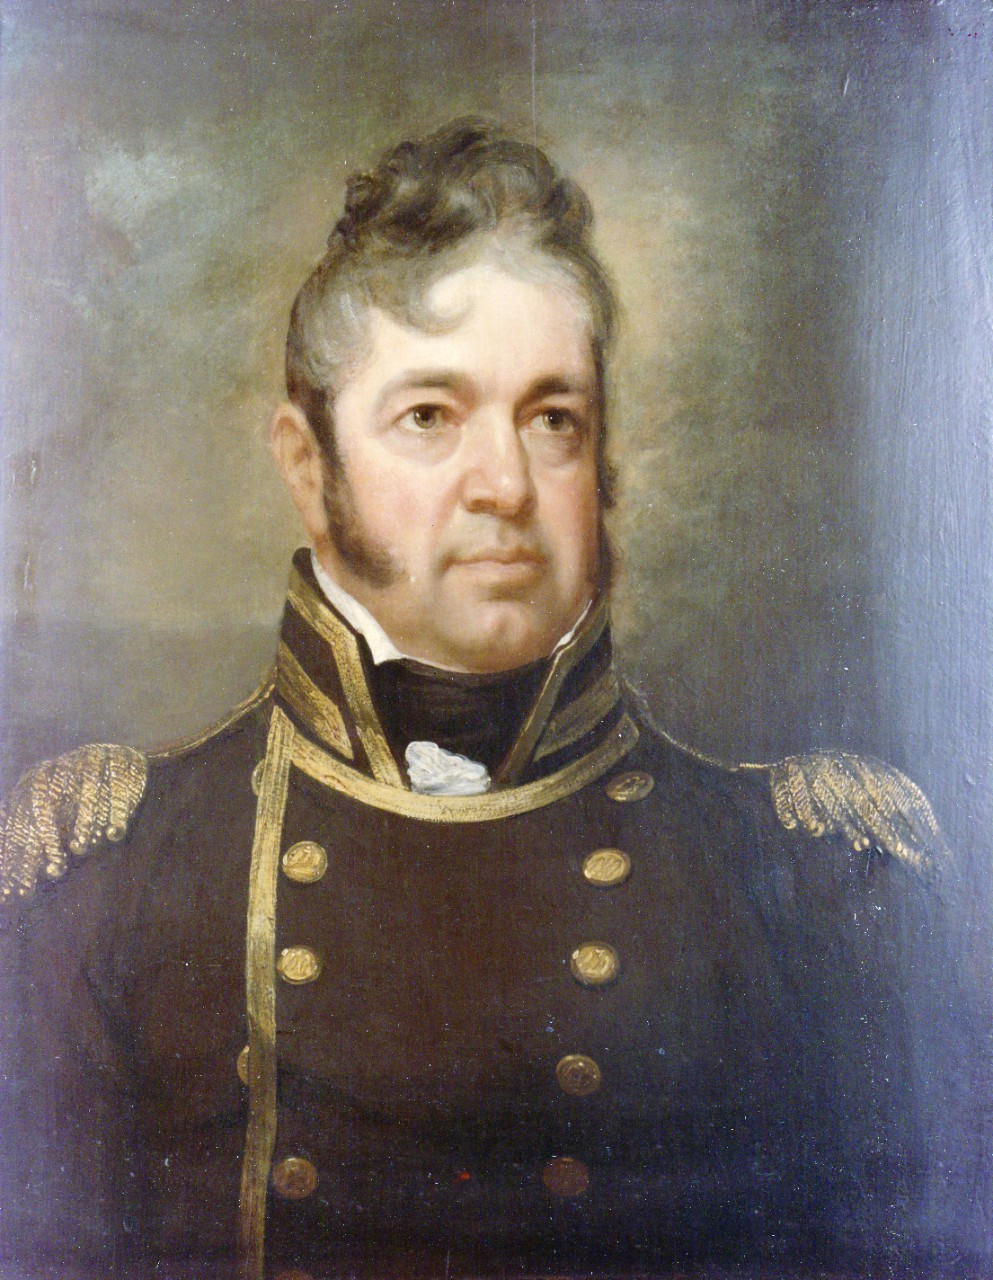 Photo #: KN-1365 Commodore William Bainbridge, USN (1774-1833)